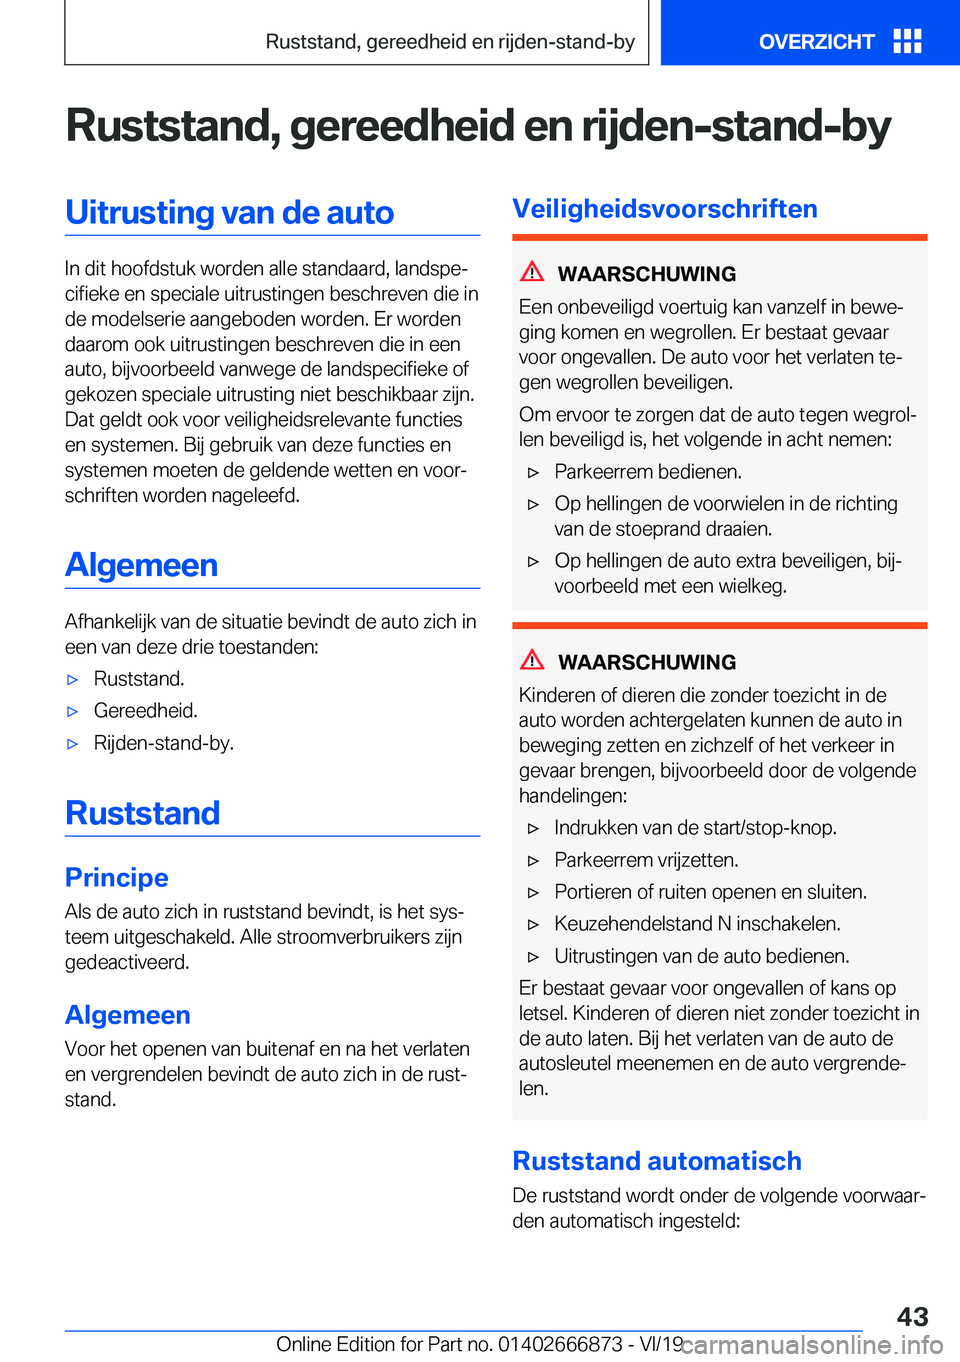 BMW X4 M 2020  Instructieboekjes (in Dutch) �R�u�s�t�s�t�a�n�d�,��g�e�r�e�e�d�h�e�i�d��e�n��r�i�j�d�e�n�-�s�t�a�n�d�-�b�y�U�i�t�r�u�s�t�i�n�g��v�a�n��d�e��a�u�t�o
�I�n��d�i�t��h�o�o�f�d�s�t�u�k��w�o�r�d�e�n��a�l�l�e��s�t�a�n�d�a�a�r�